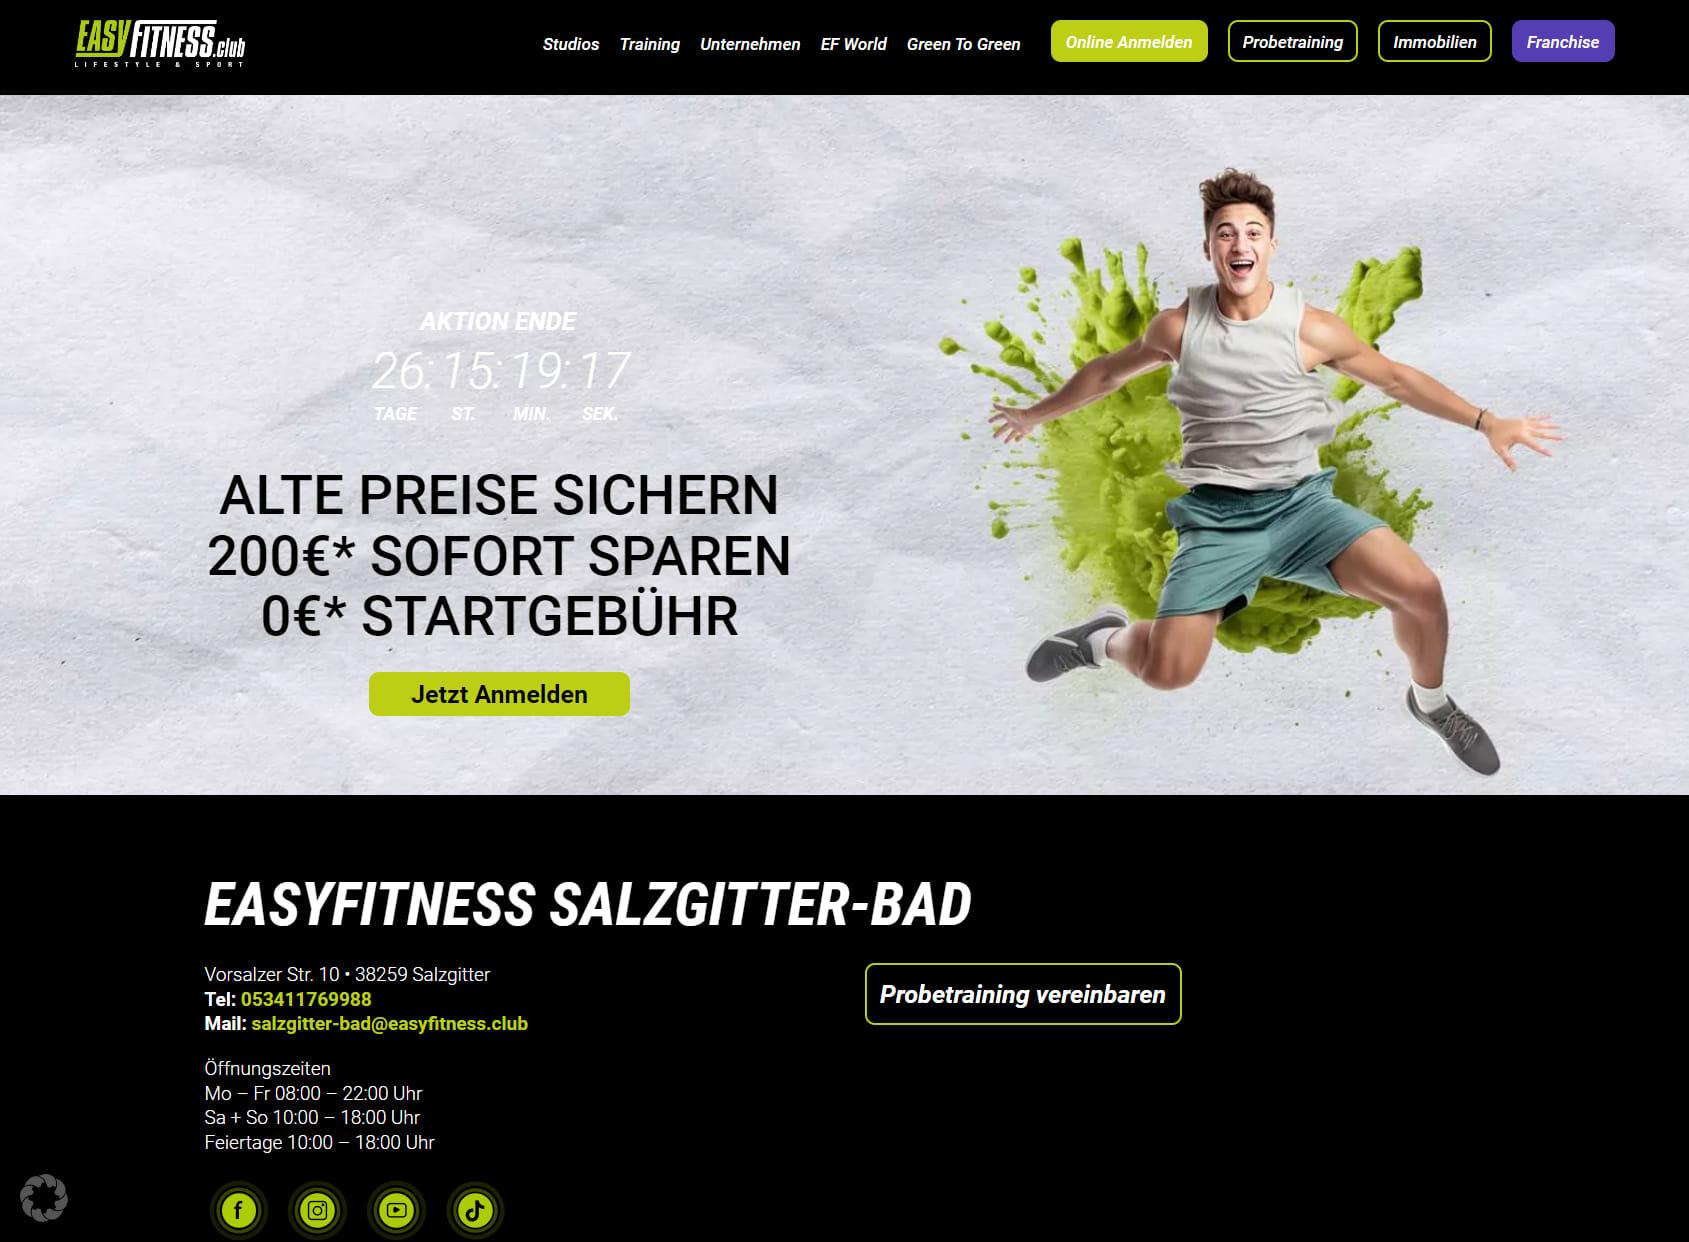 Easyfitness.club Salzgitter-Bad